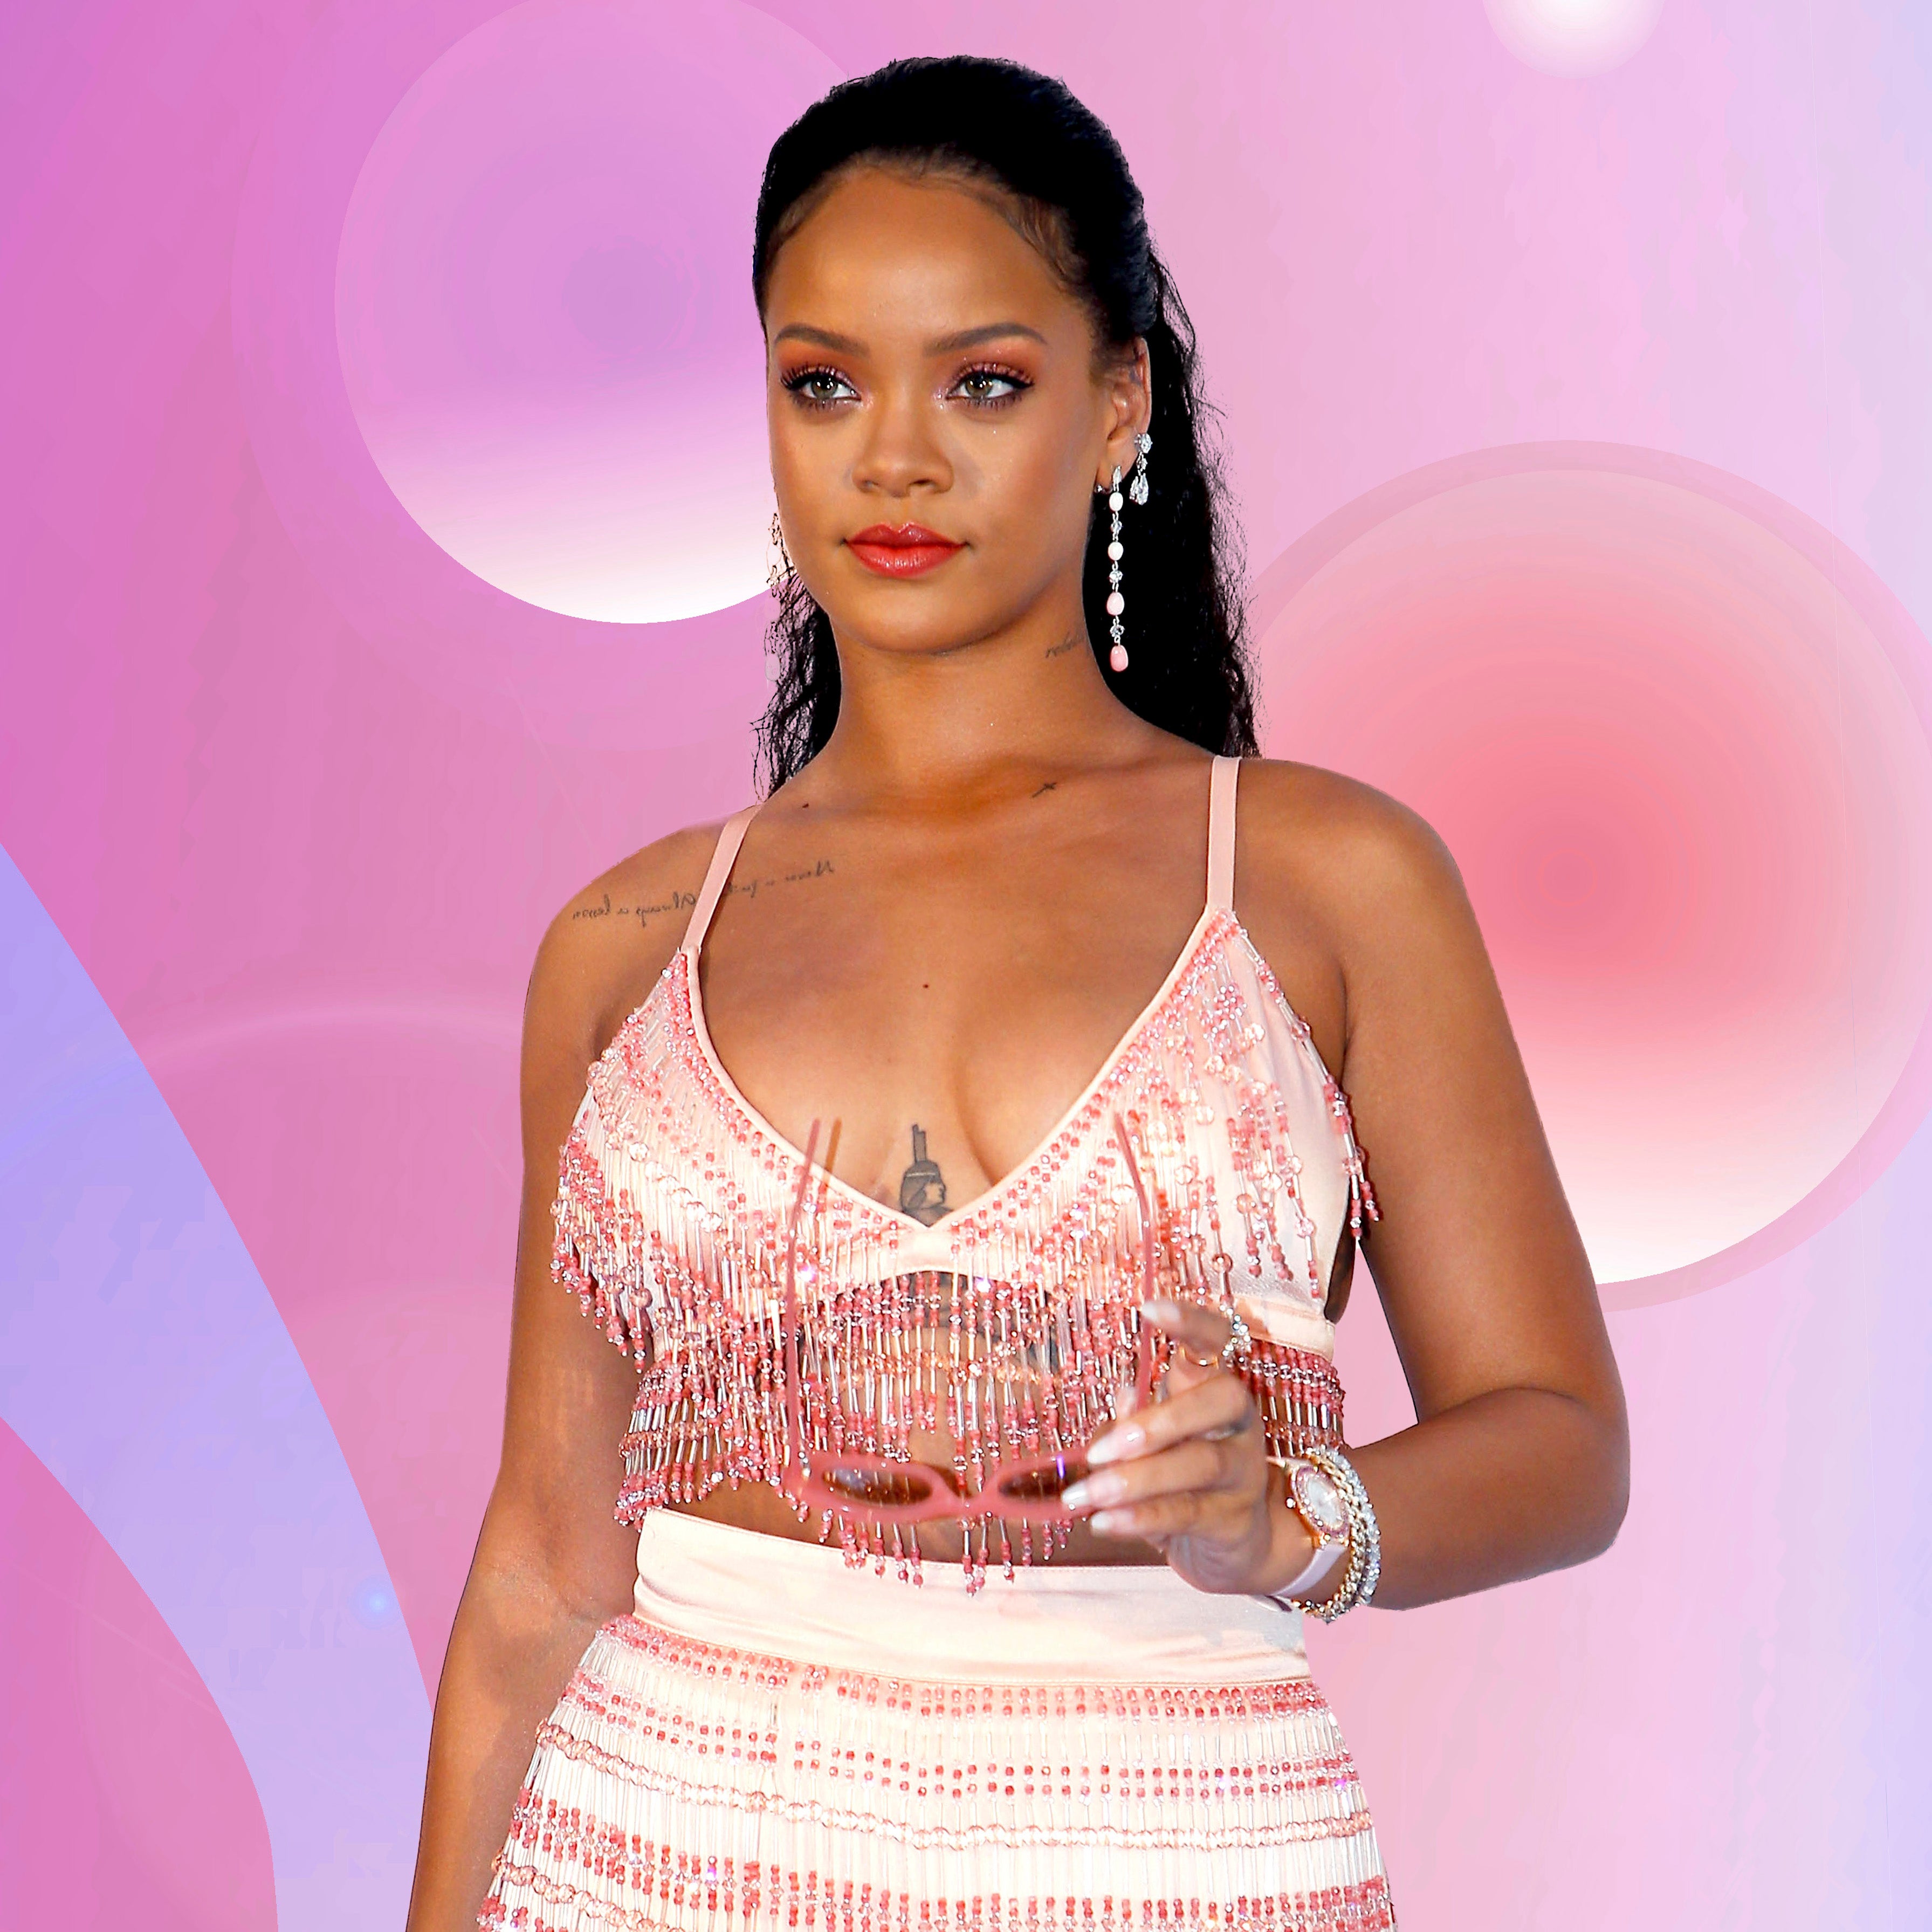 Rihanna models her Fenty Beauty make-up at Valerian premiere